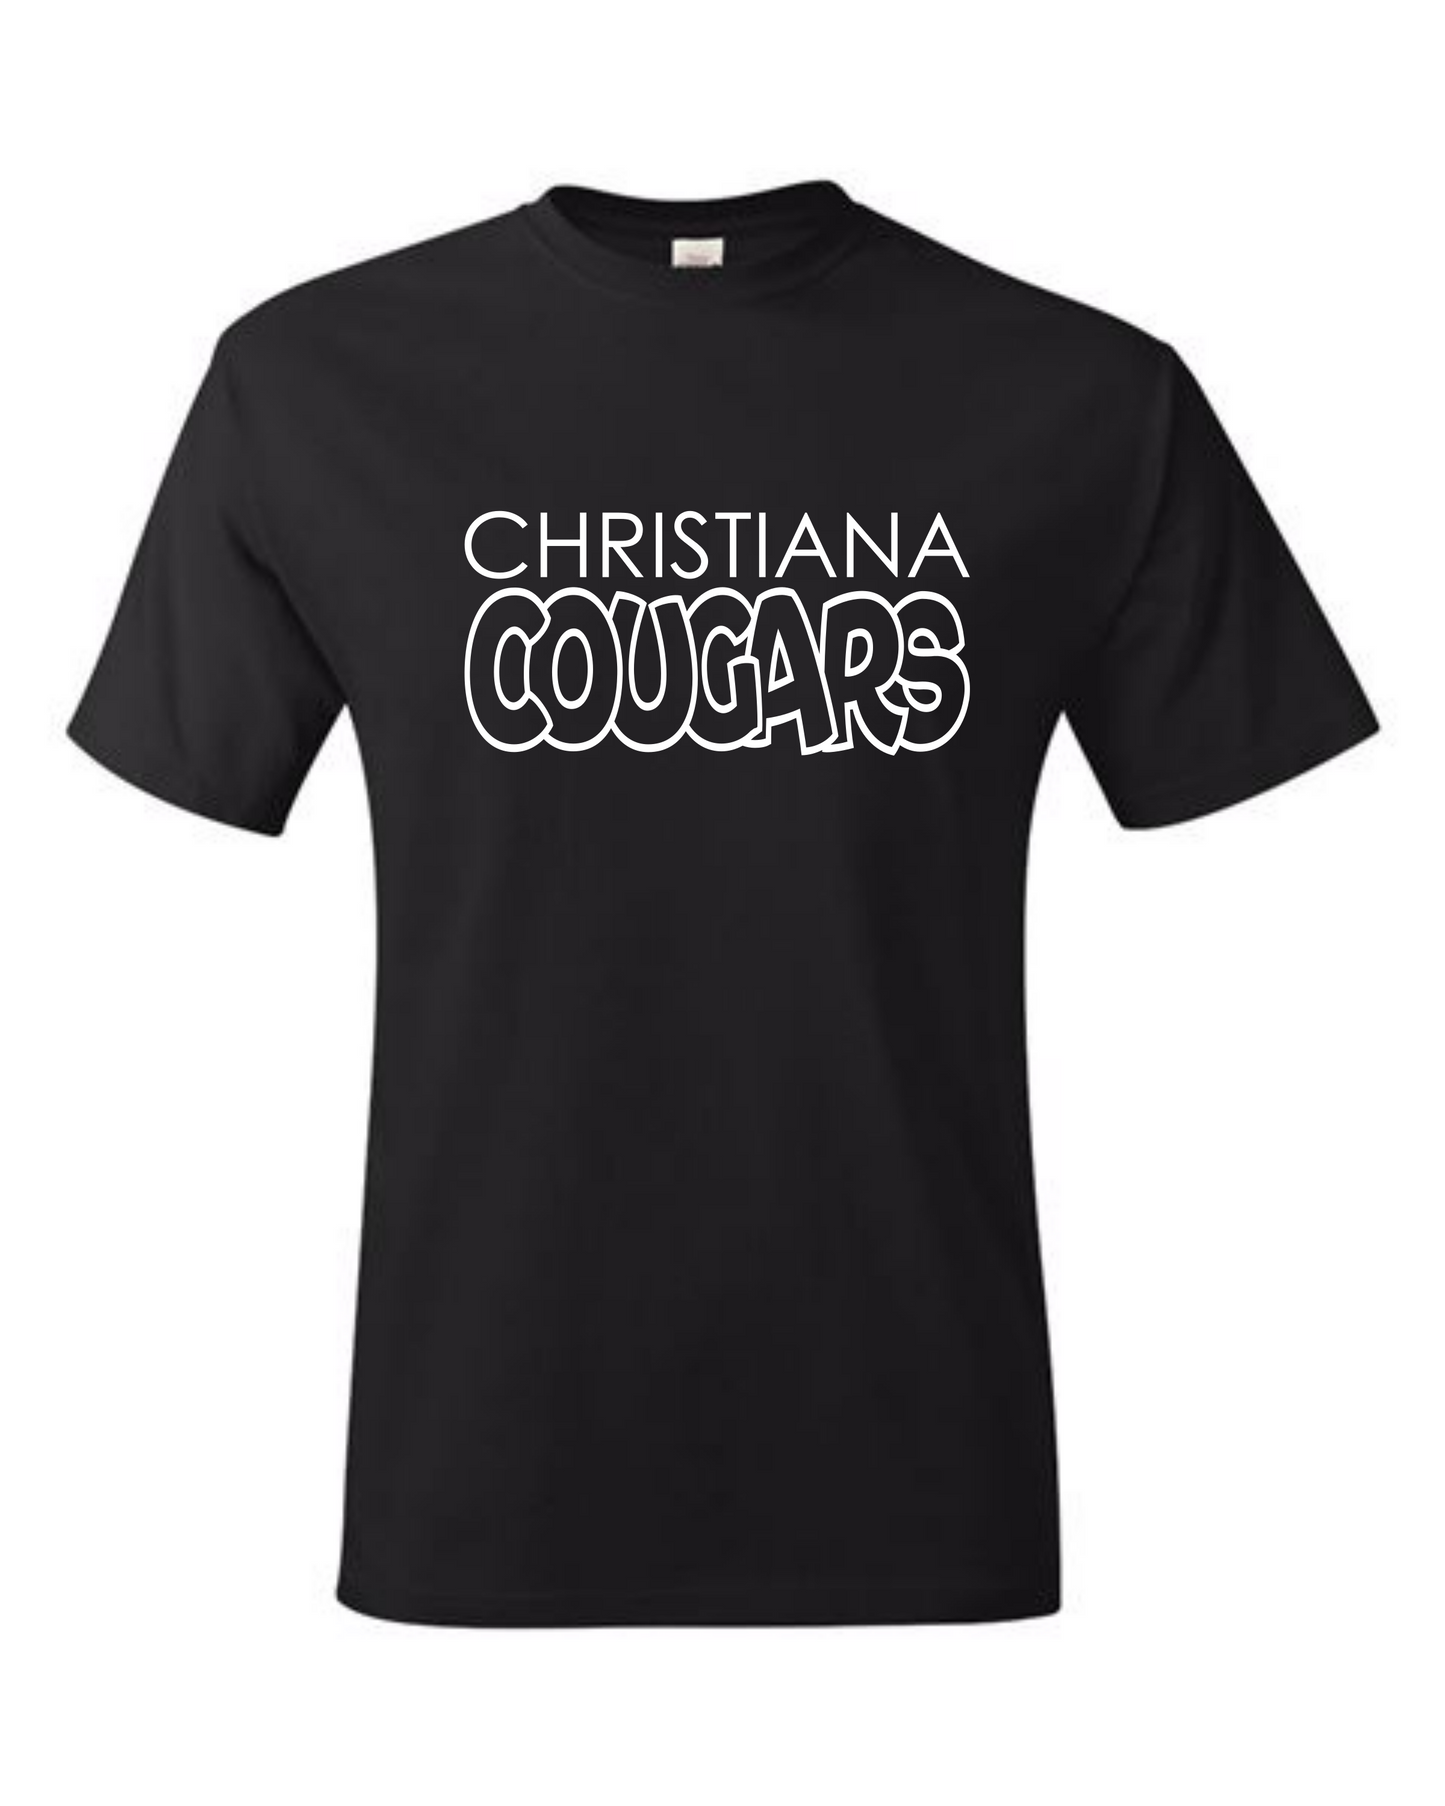 Christiana Cougars Outline Tshirt